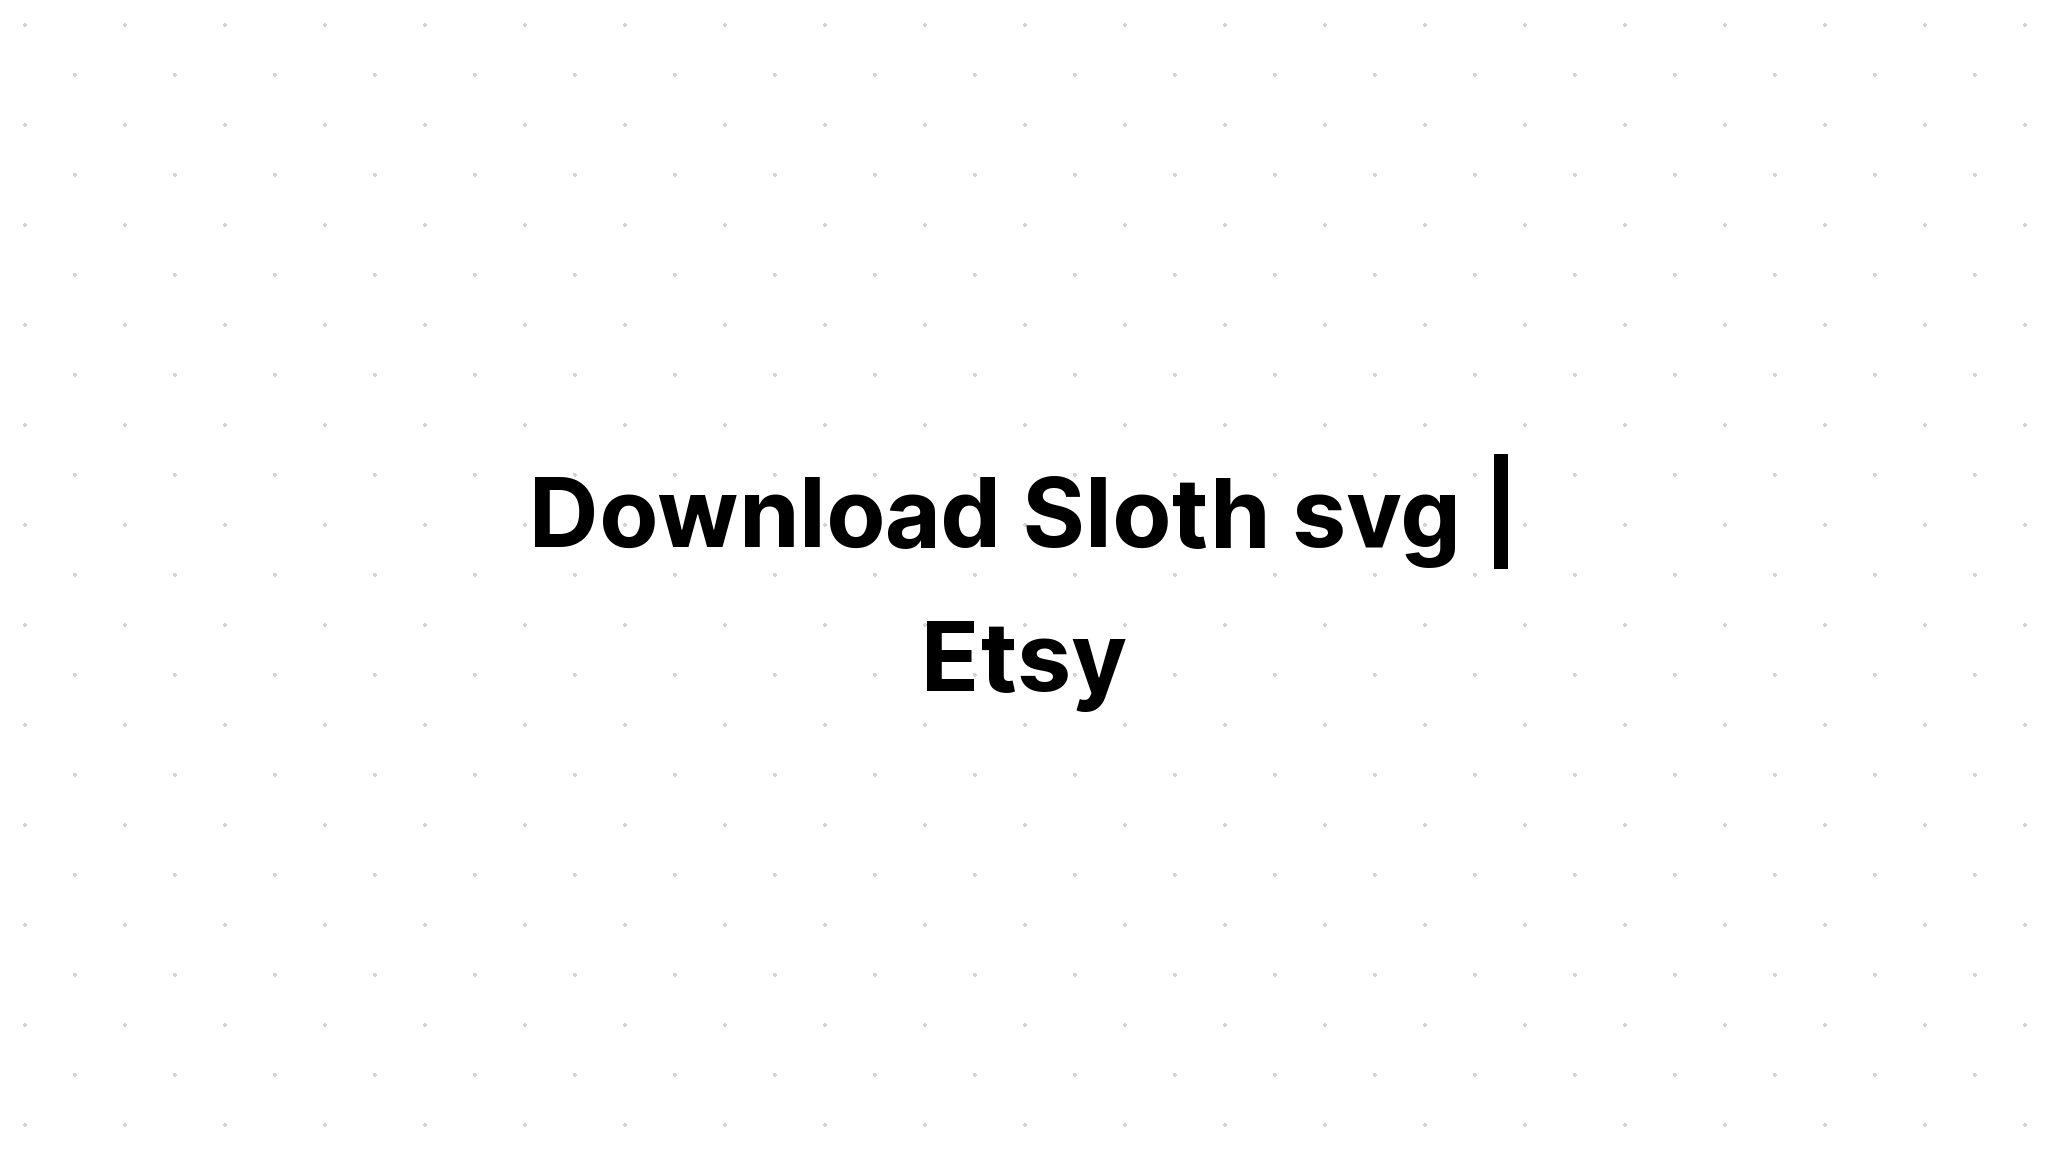 Download Free Sloth Svg - Layered SVG Cut File